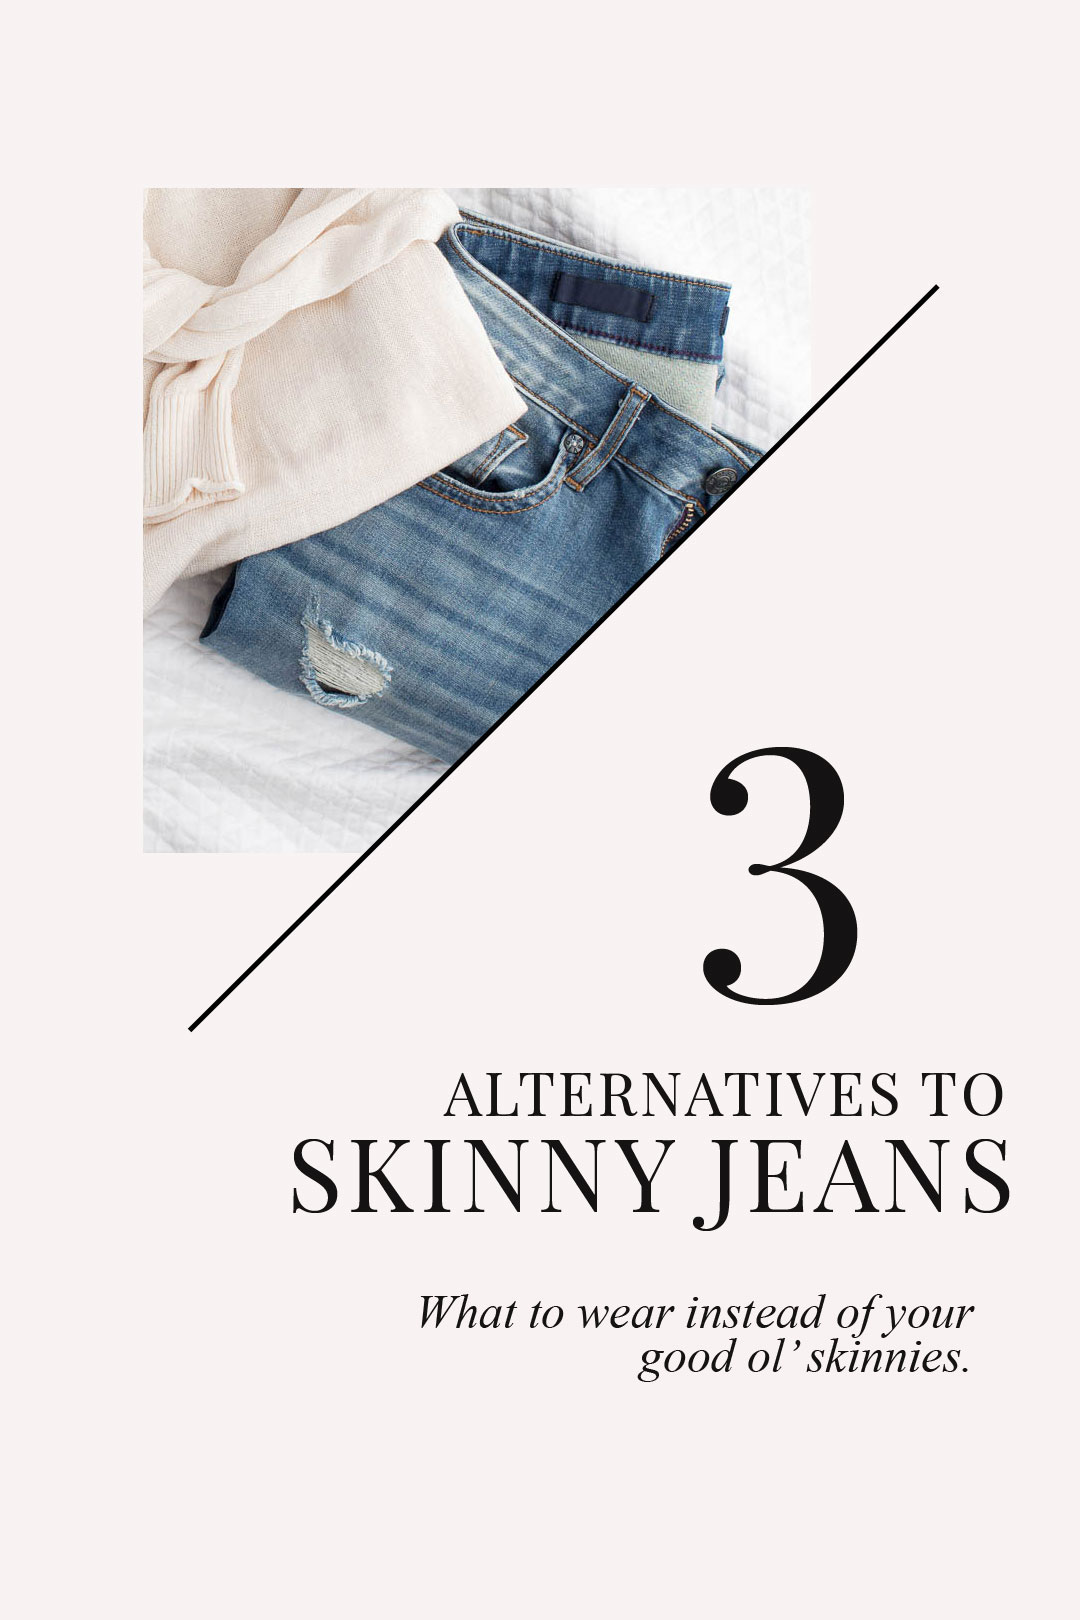 3 alternatives to skinny jeans